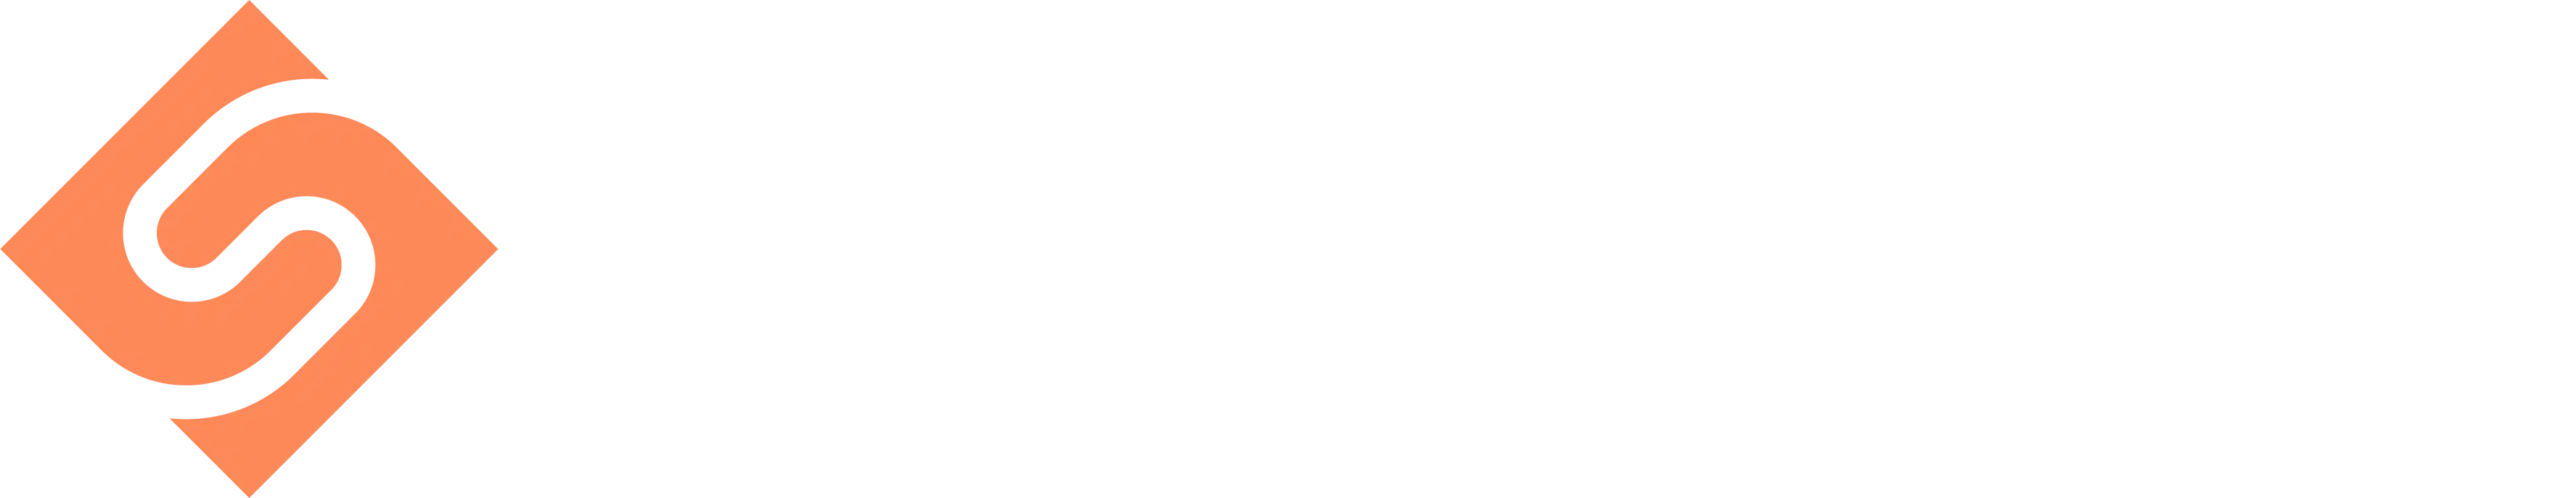 SweepCasinos Logo White Text Transparent Background